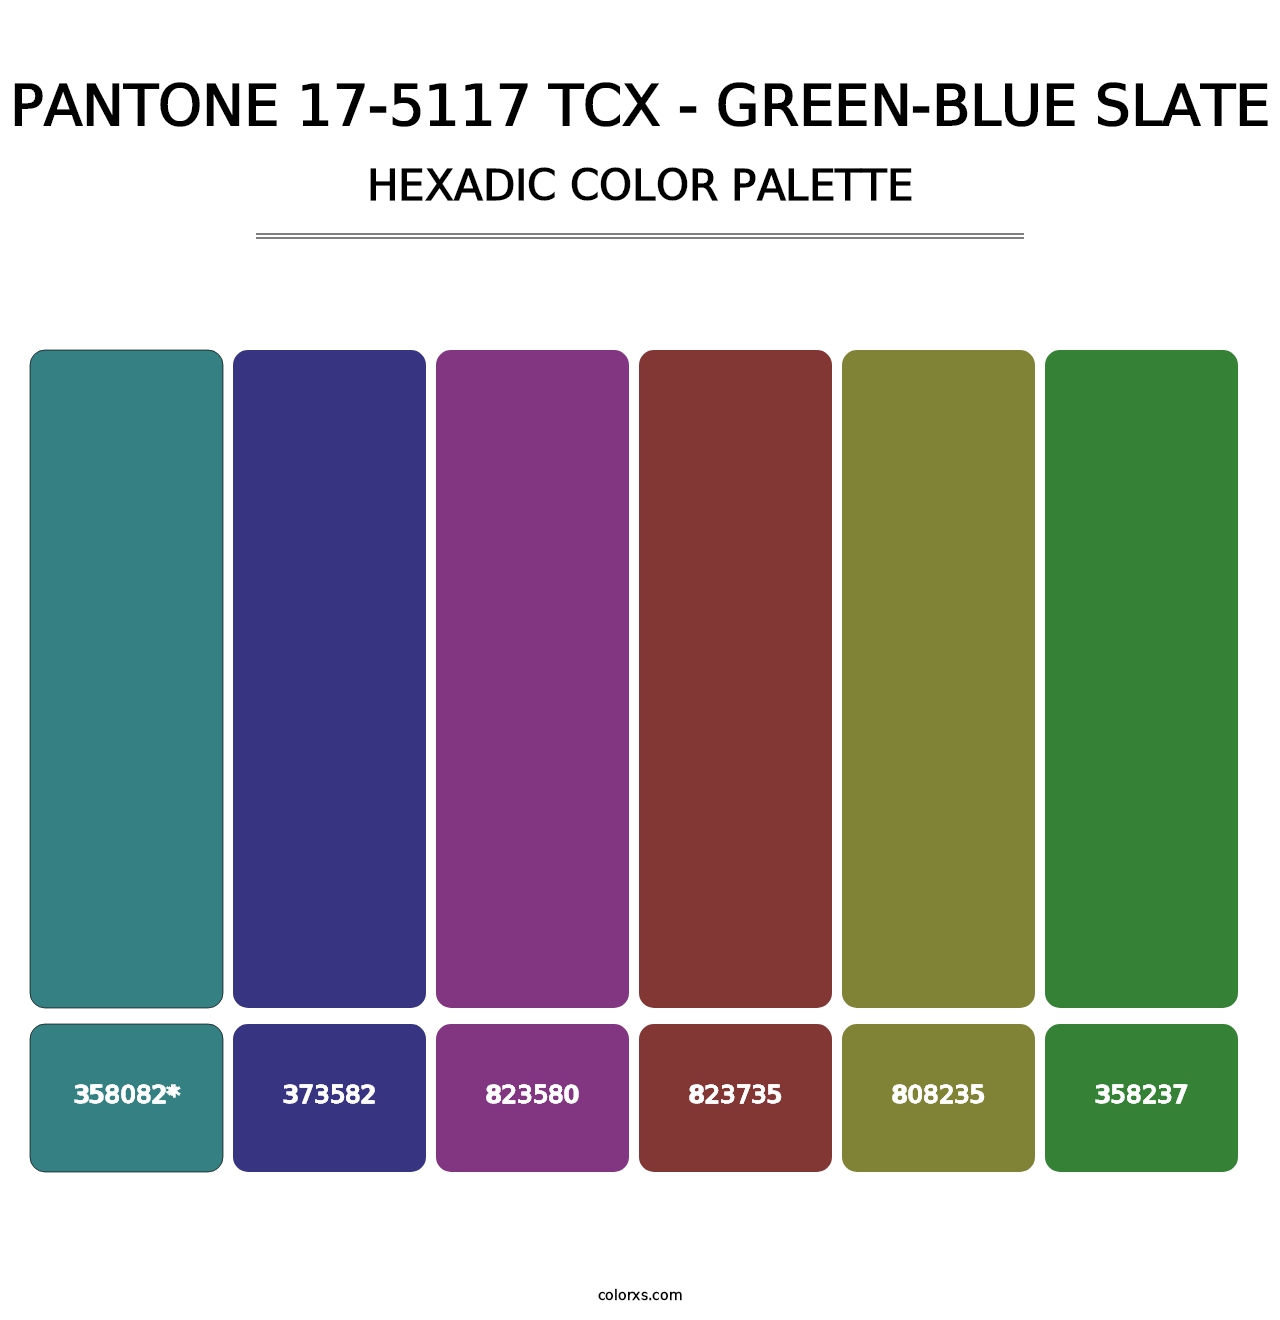 PANTONE 17-5117 TCX - Green-Blue Slate - Hexadic Color Palette